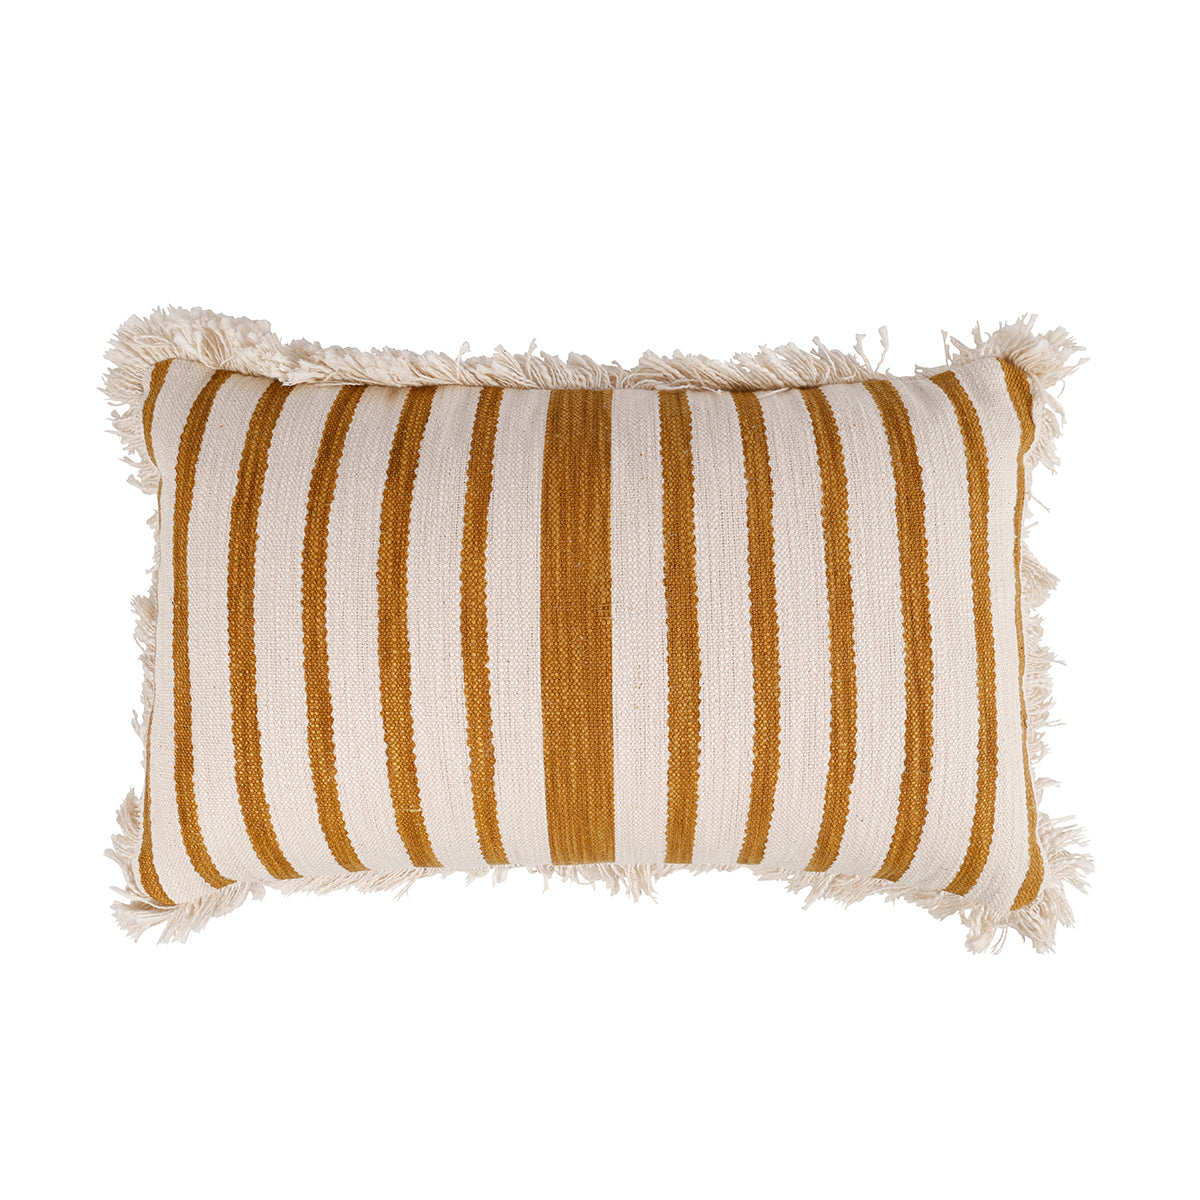 Cora Gold Stripe Cushion With Fringing